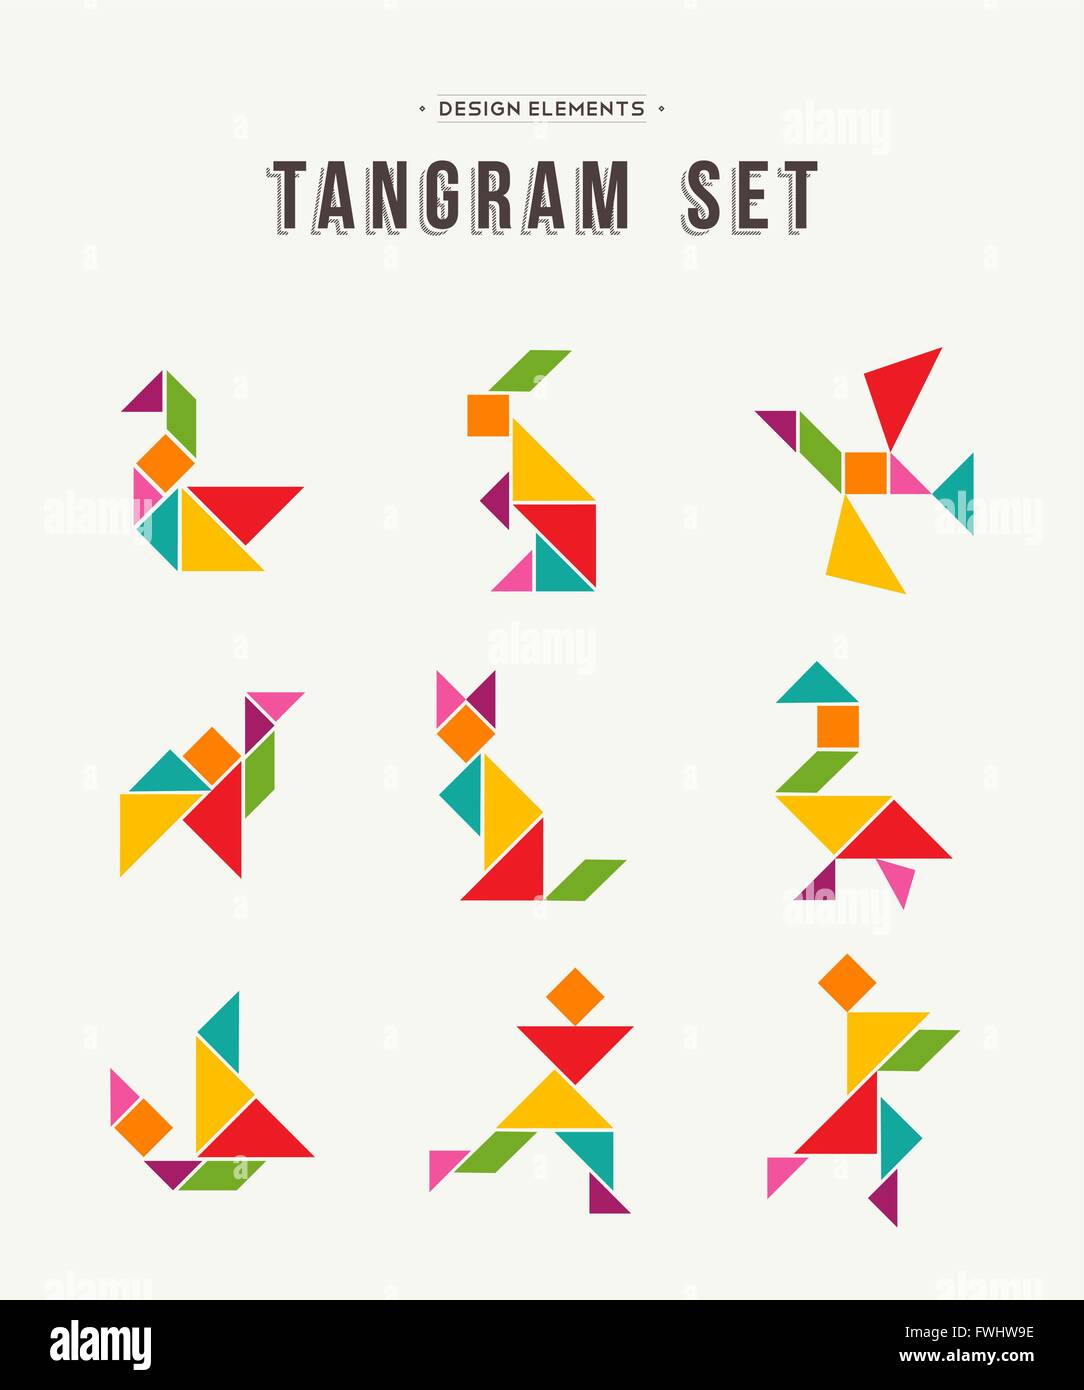 Tangram Imágenes de stock - Alamy